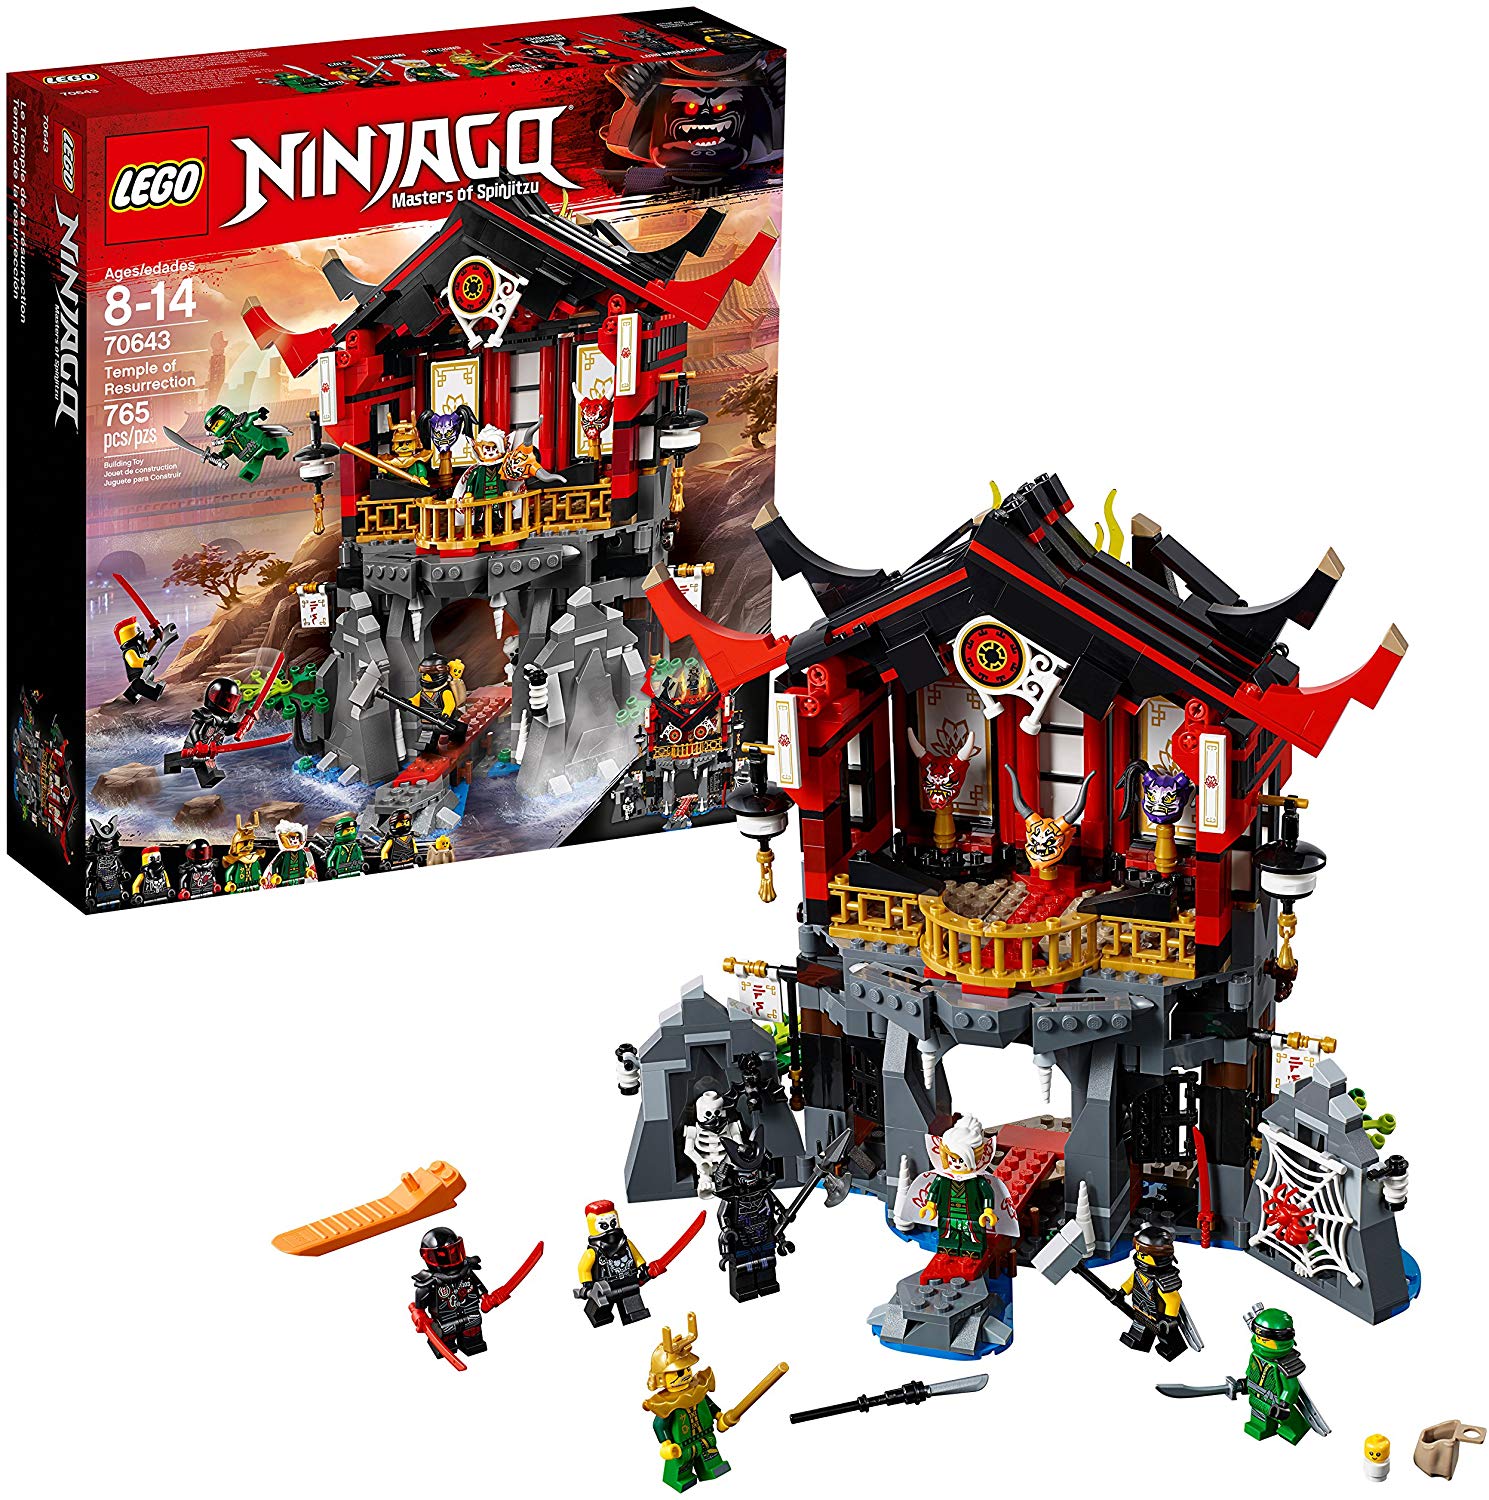 LEGO 70643 Ninjago Temple of Resurrection Construction Kit (765 Pieces)